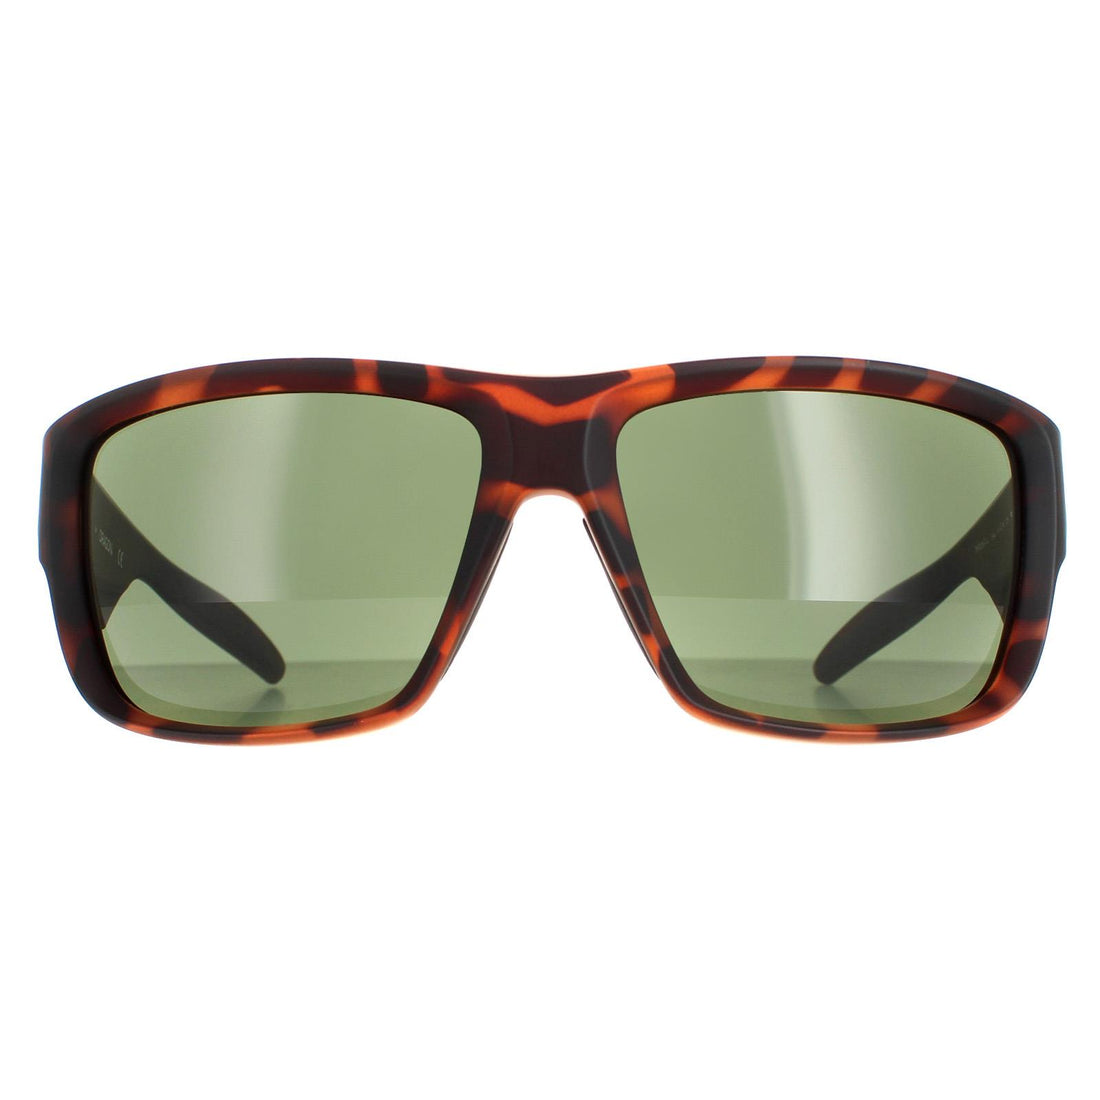 Dragon Deadlock Sunglasses Matte Tortoise / Lumalens G15 Green